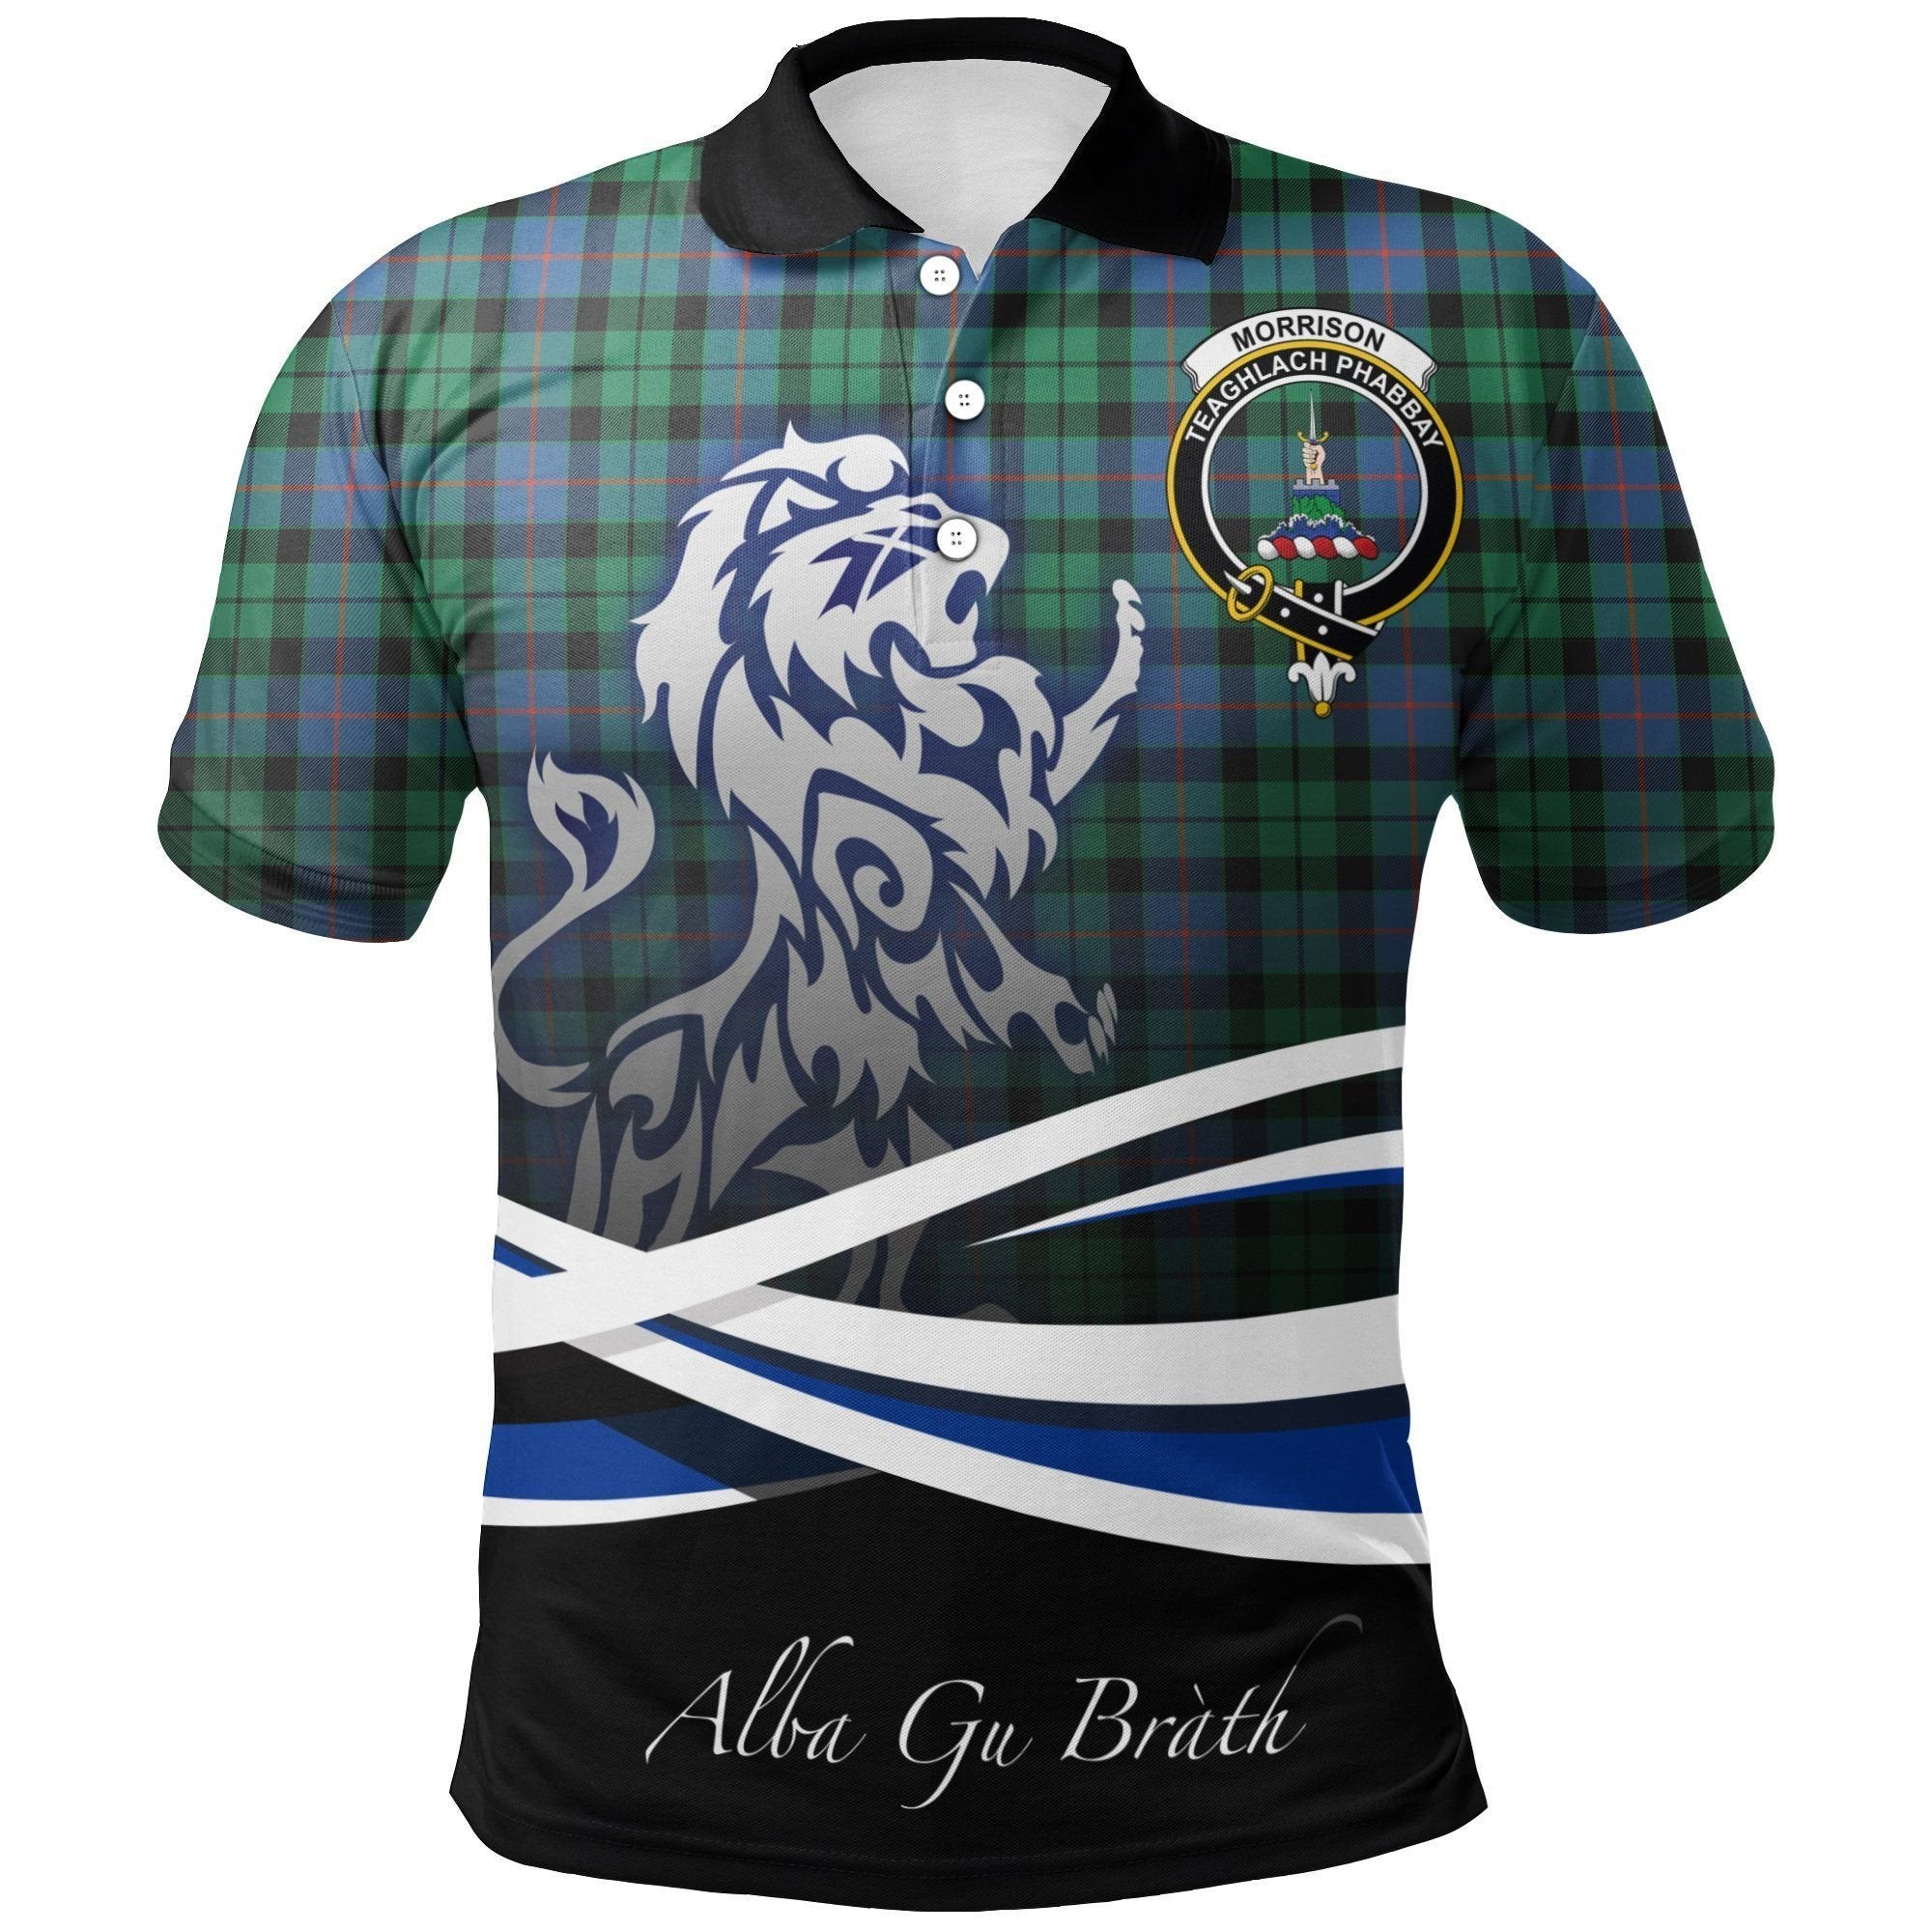 Morrison Ancient Clan Polo Shirt, Scottish Tartan Morrison Ancient Clans Polo Shirt Crest Lion Style